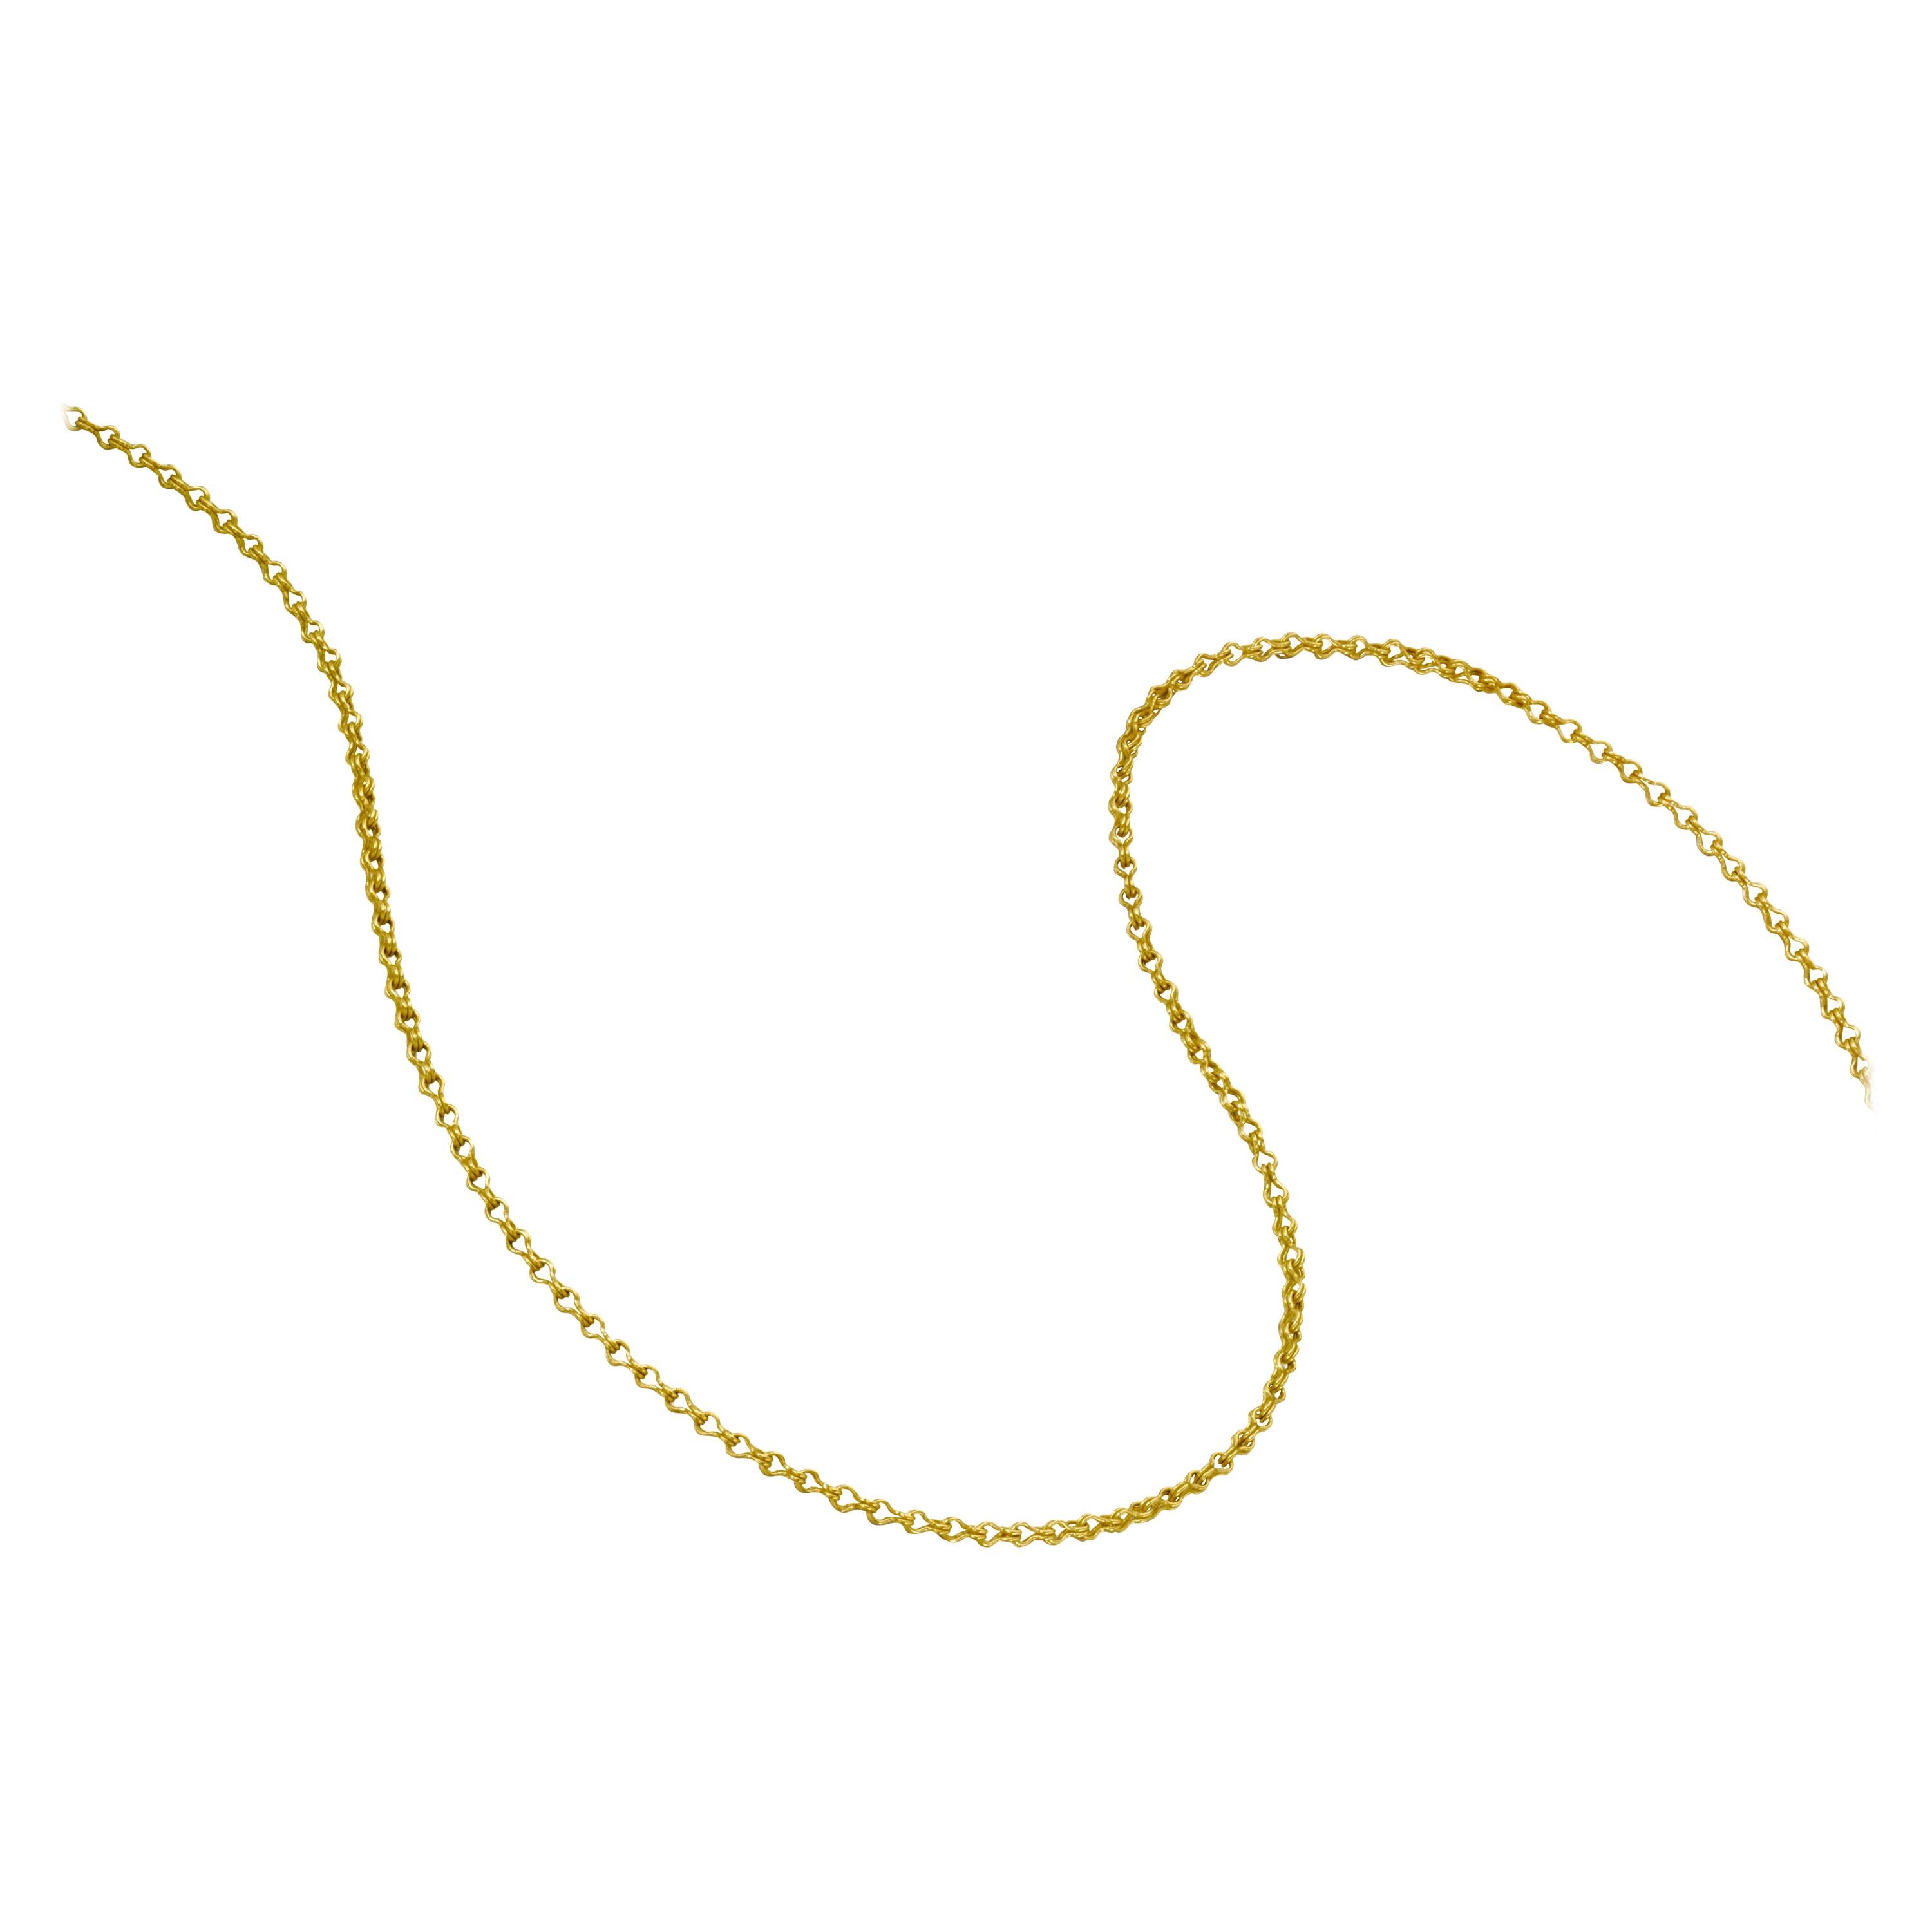 22 Karat Yellow Gold Chain Necklace